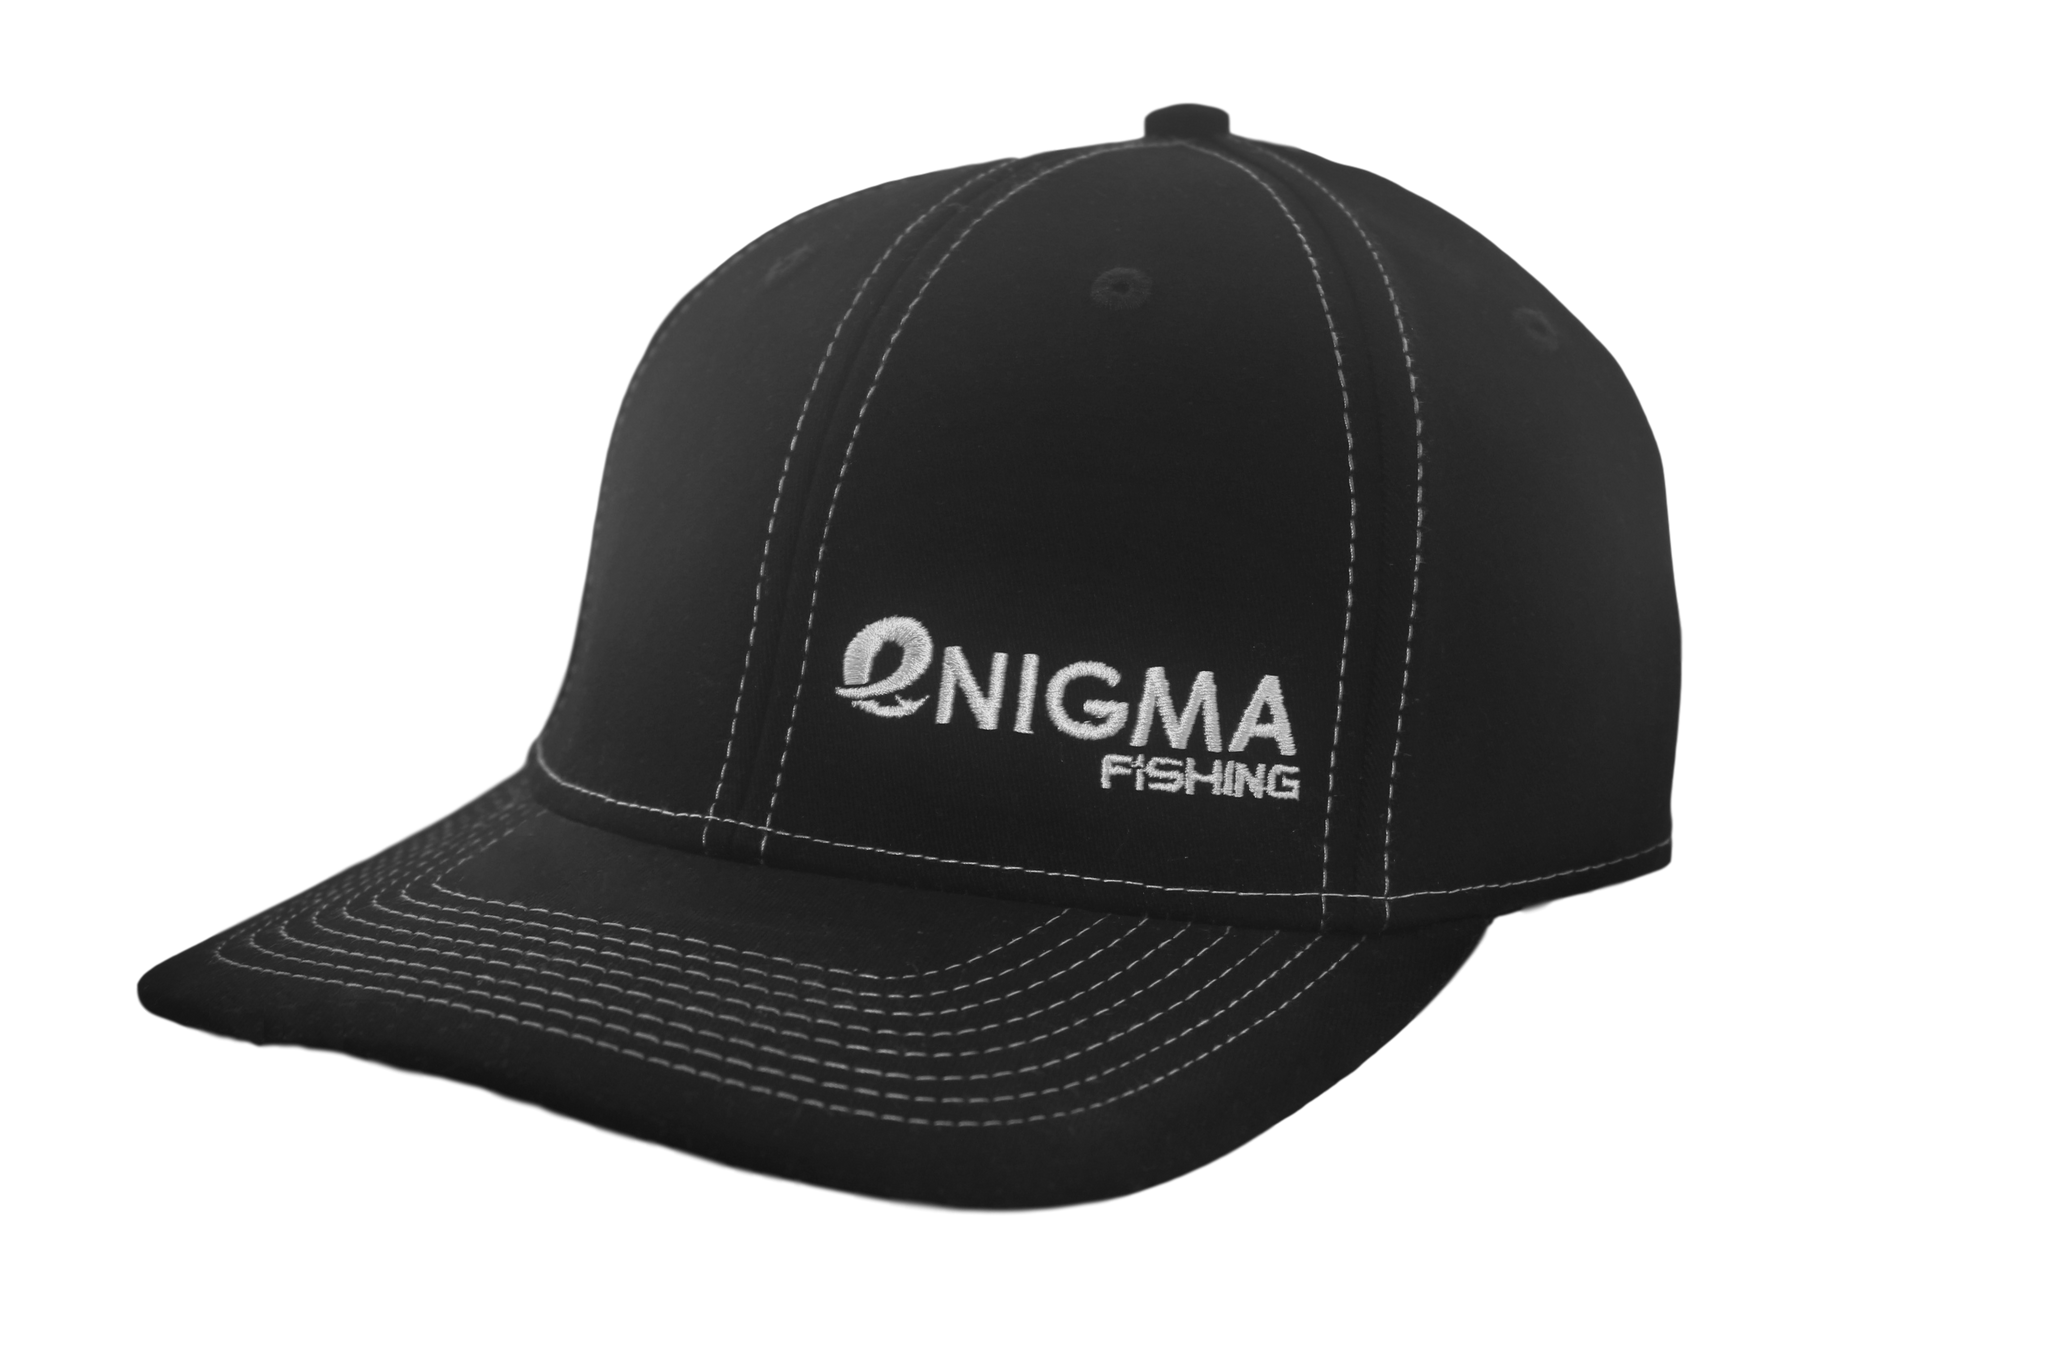 Enigma Black with White Pinstripe Hat